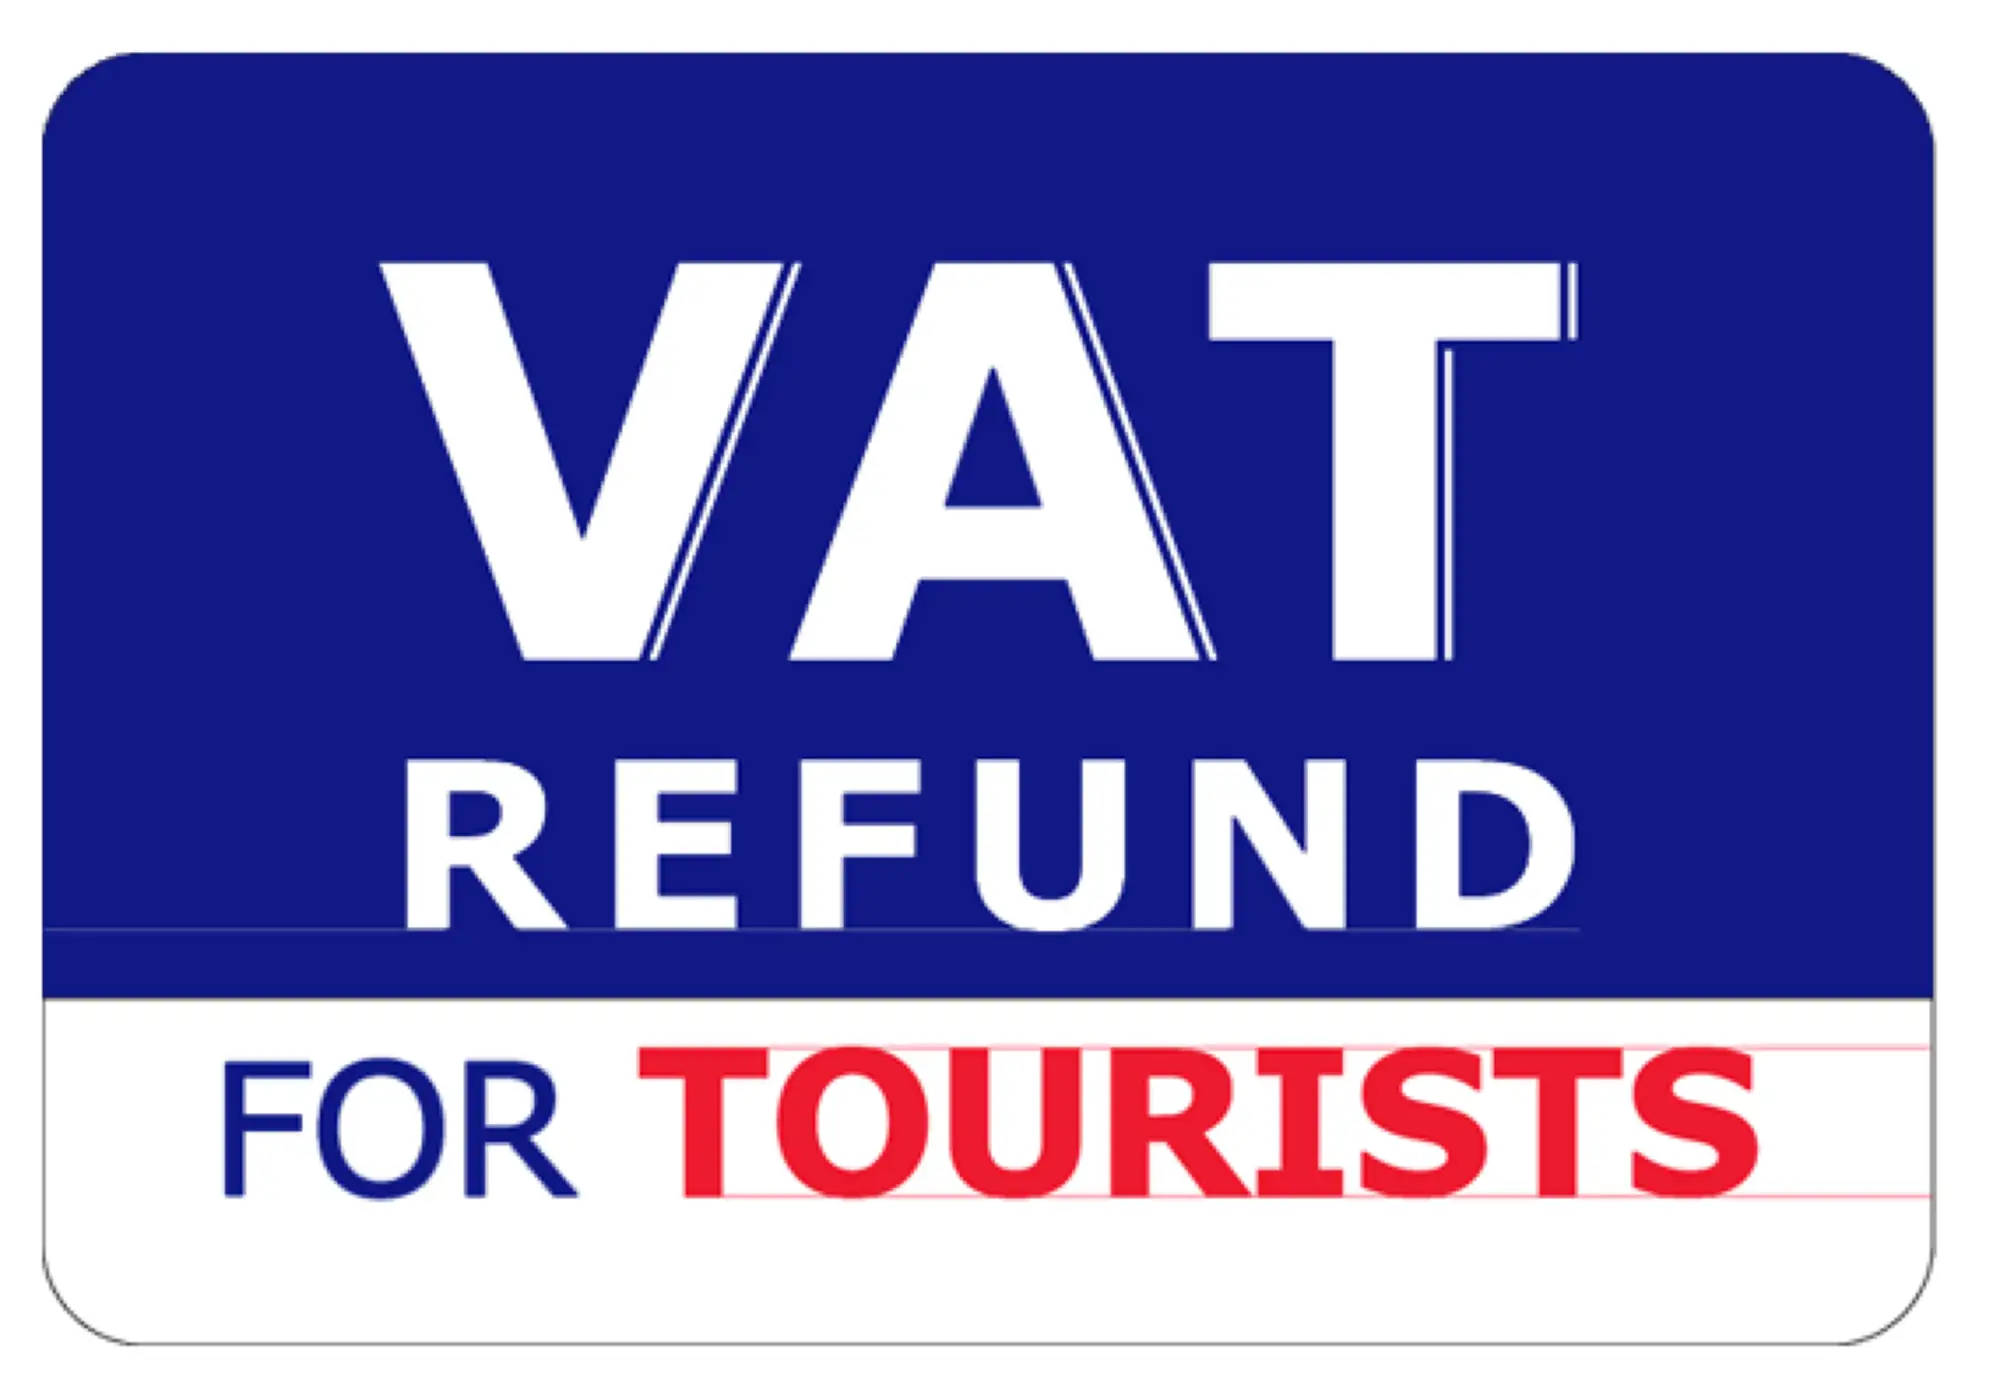 VAT REFUND FOR TOURISTS標誌